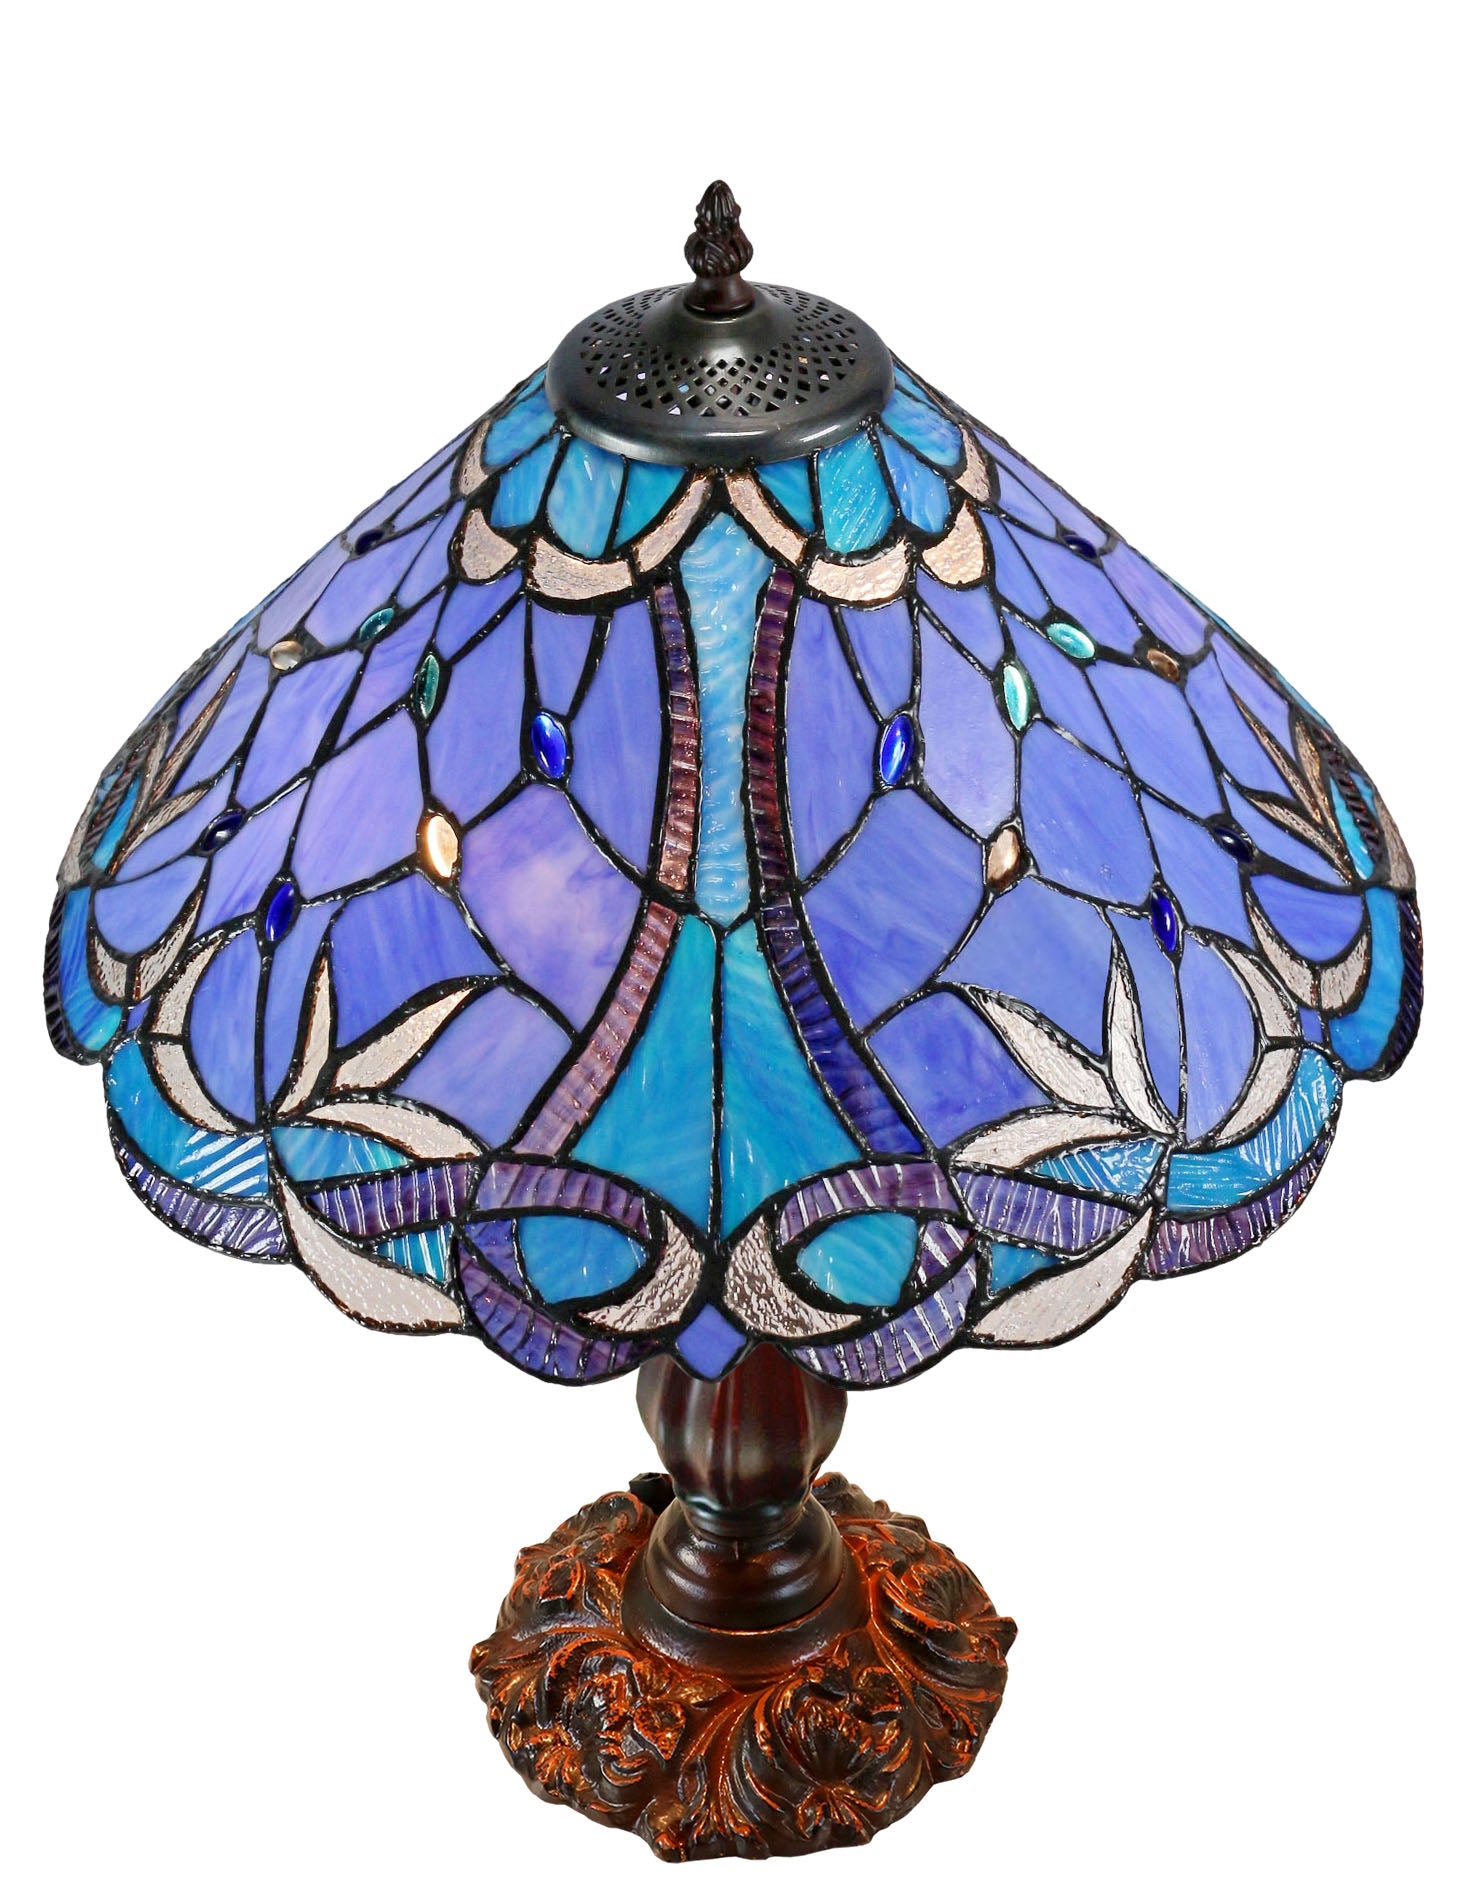 16" Large Blue Ribbon Clover Tiffany Table Lamp